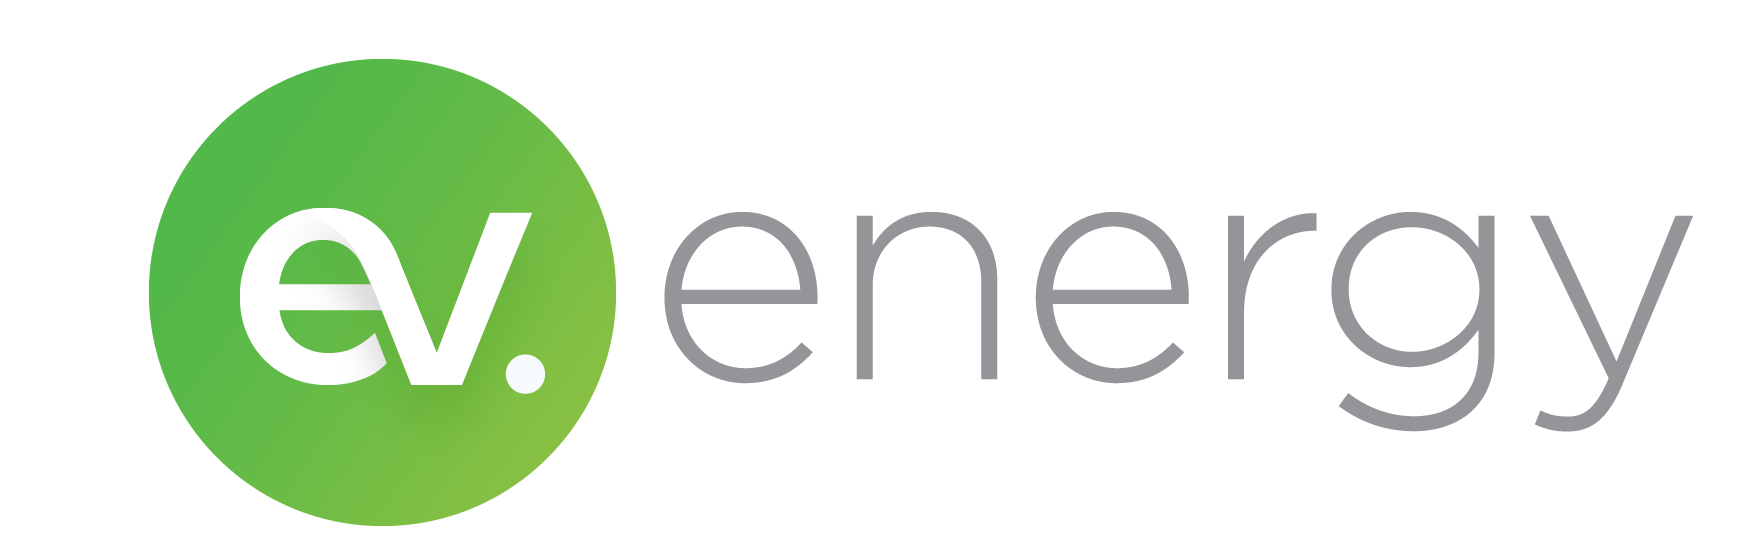 ev energy logo